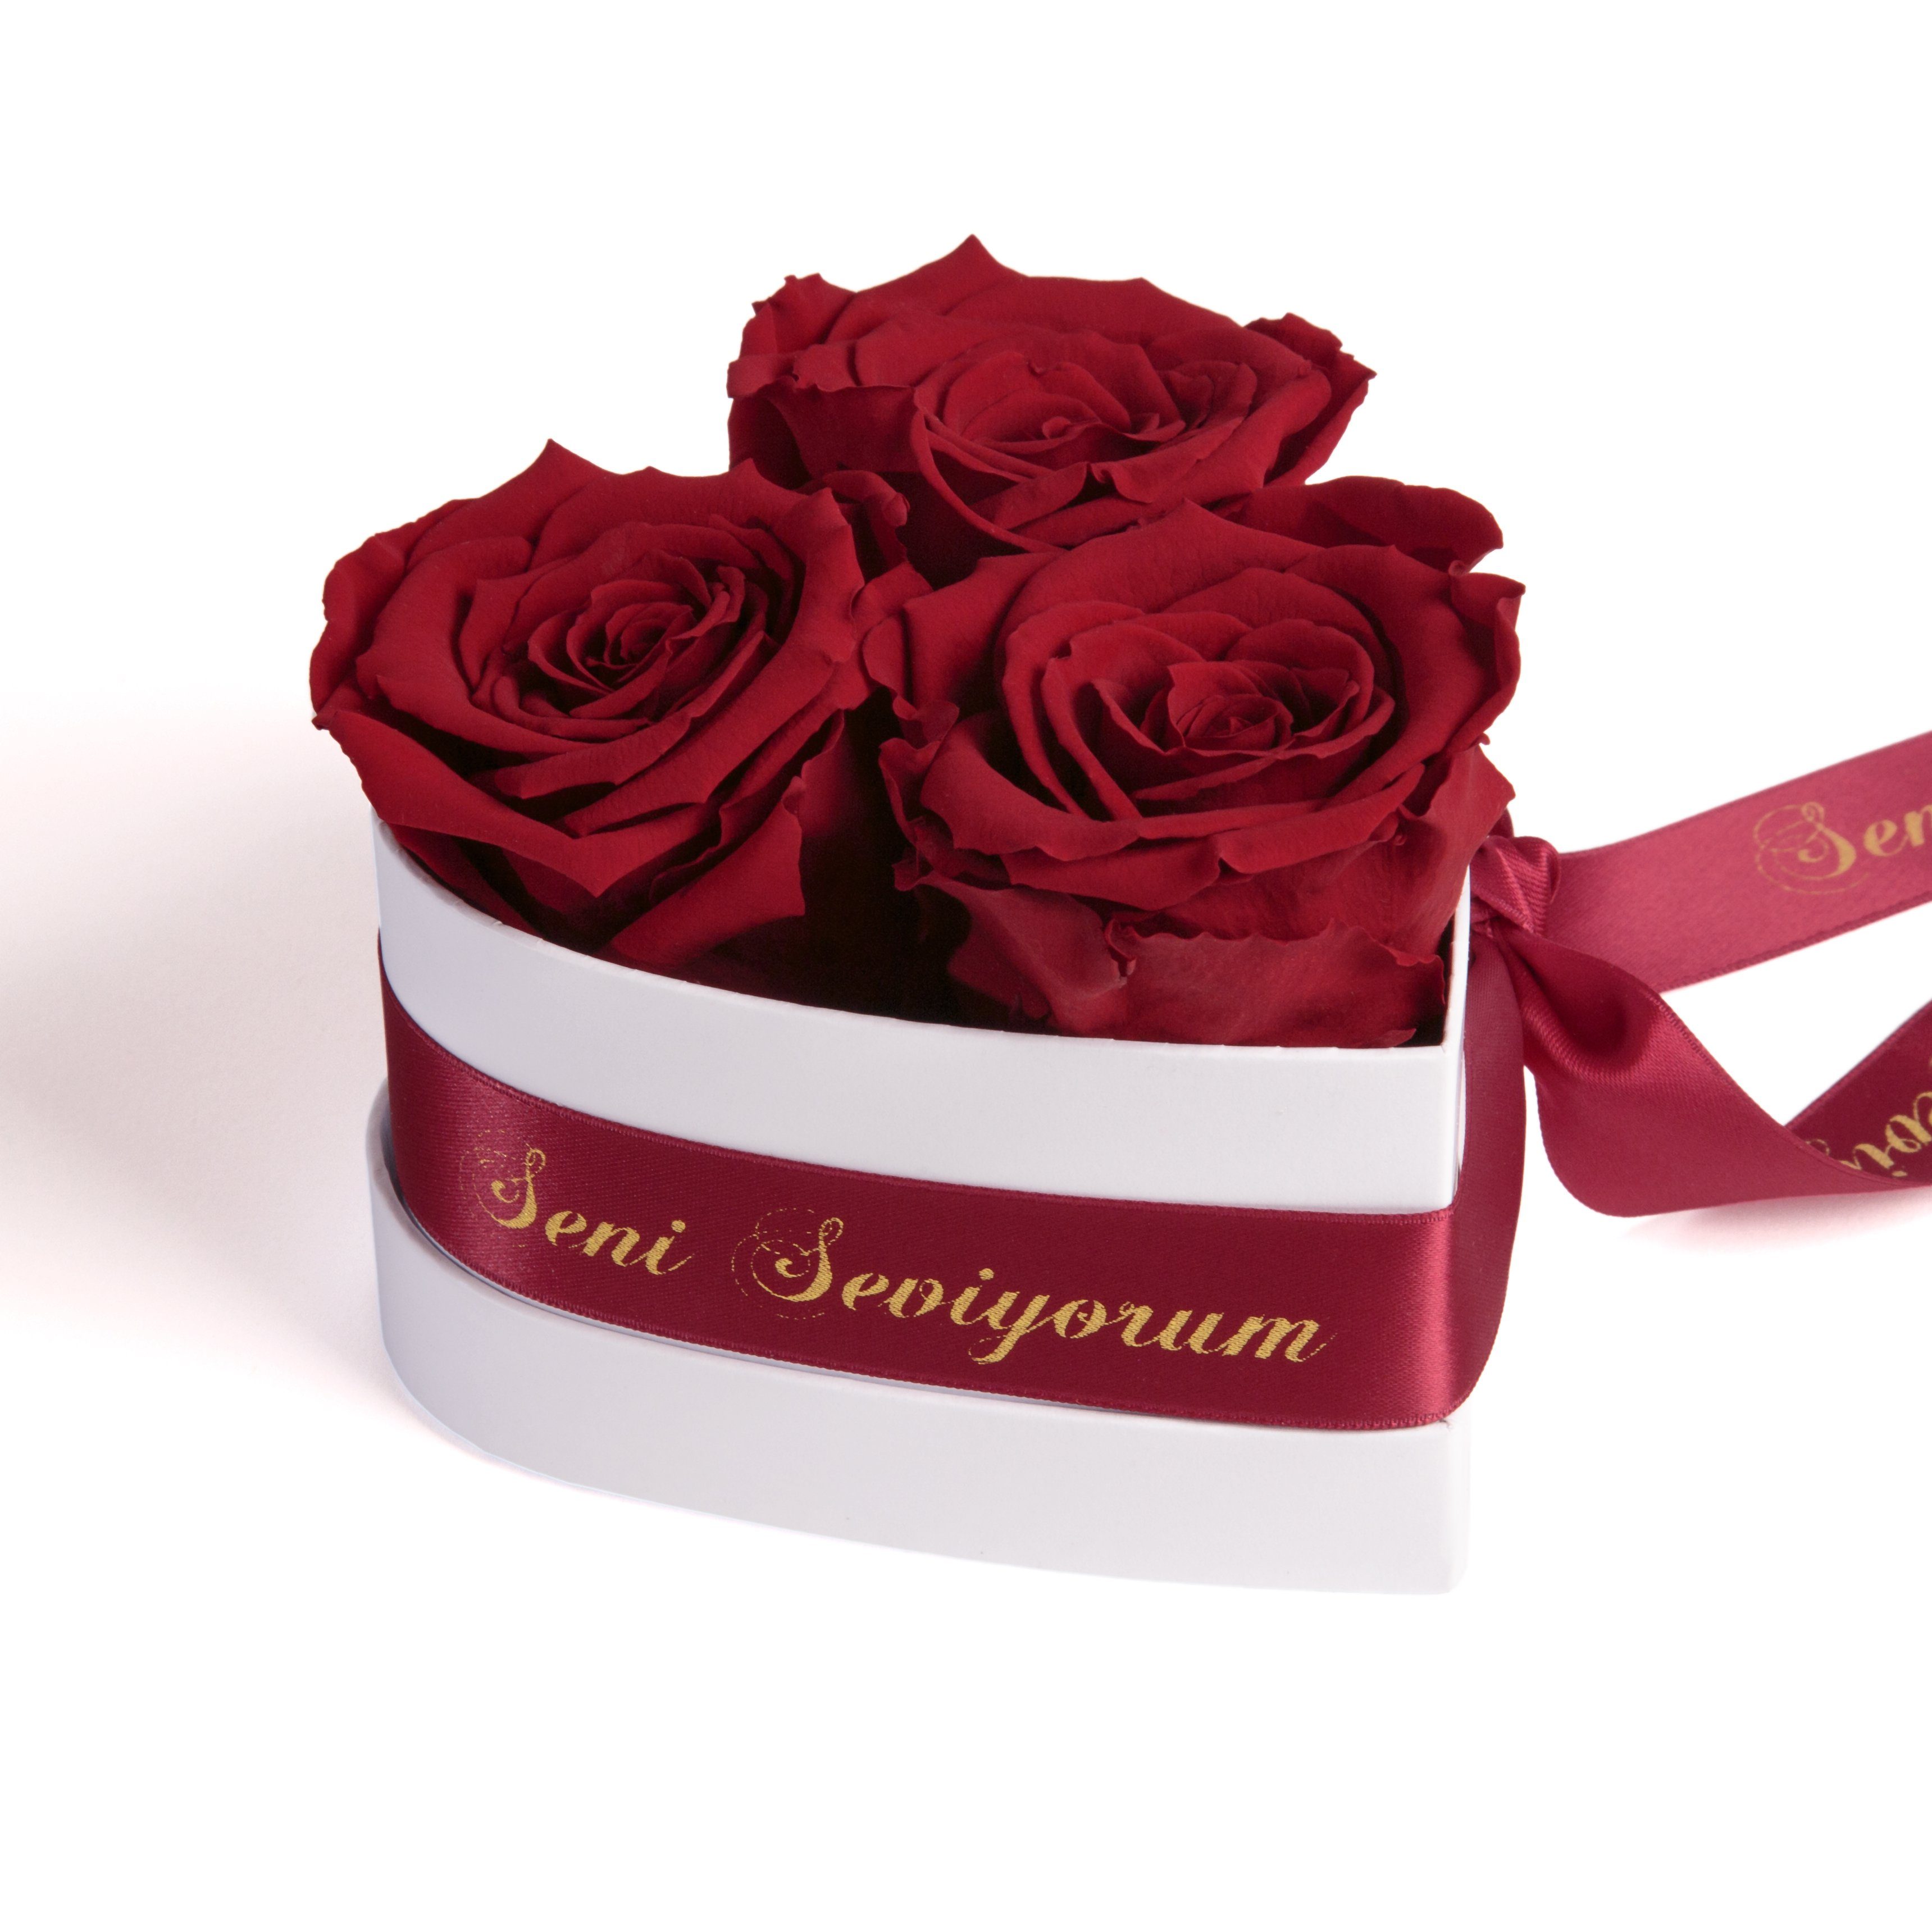 Kunstblume Seni Seviyorum Infinity Rosenbox Herz 3 echte Rosen konserviert Rose, ROSEMARIE SCHULZ Heidelberg, Höhe 10 cm, echte Rosen lang haltbar Burgundy